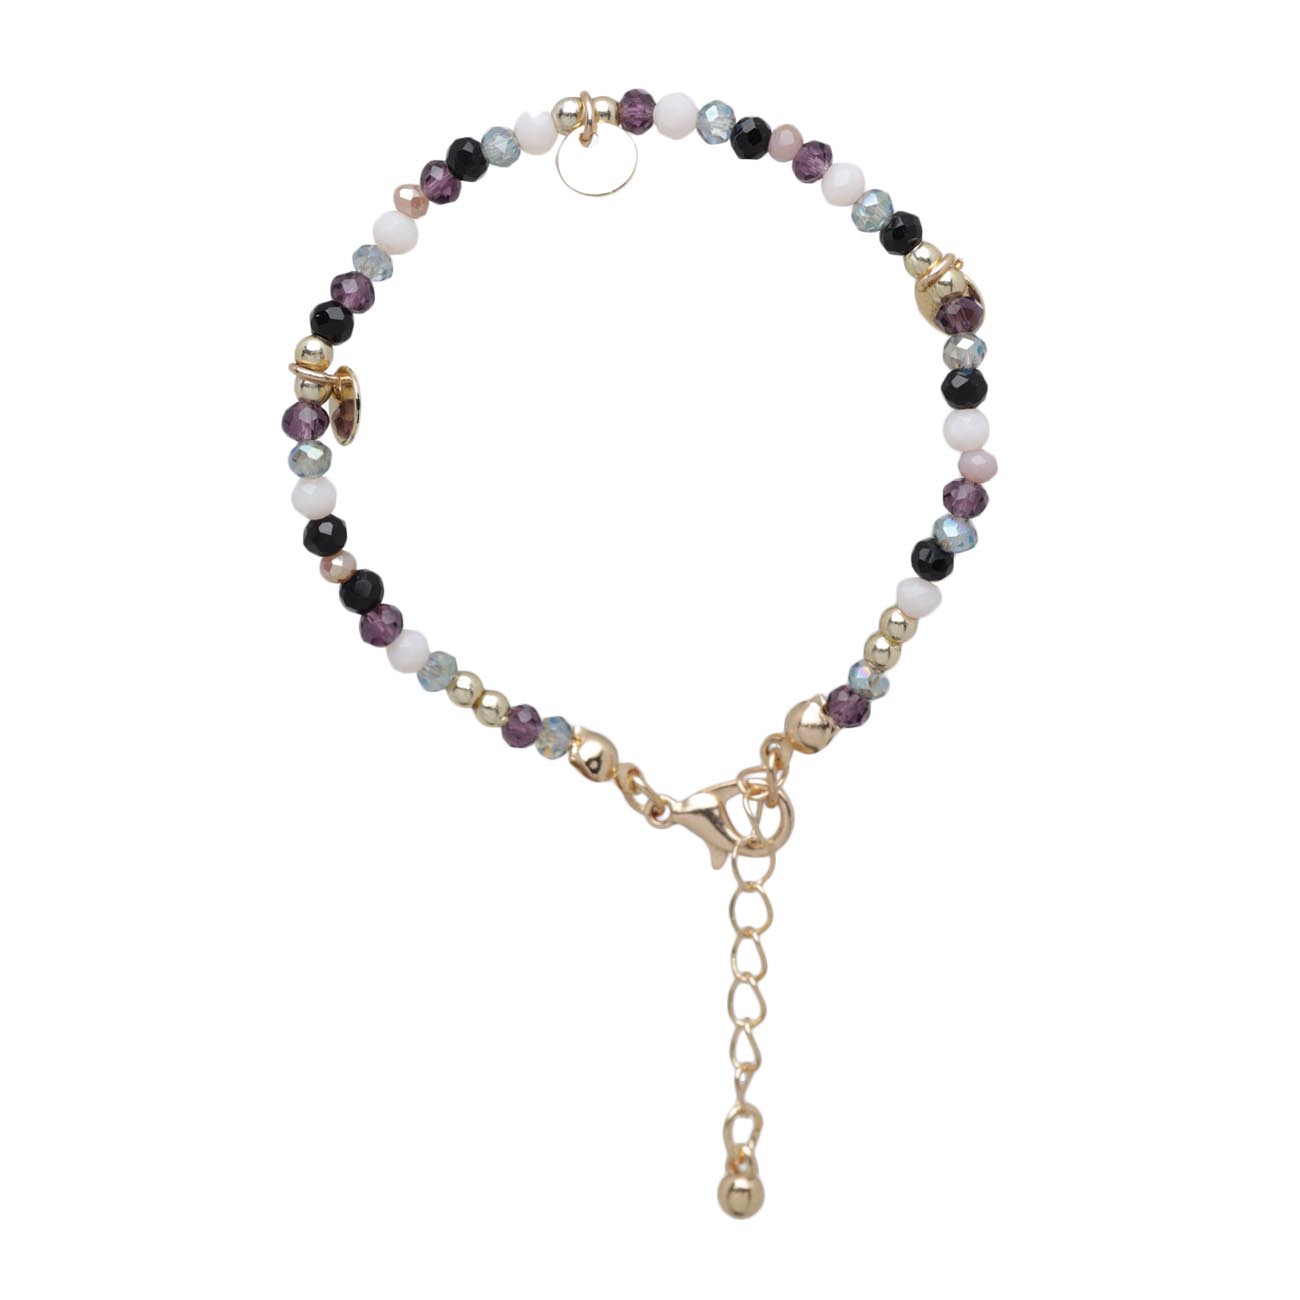 Bracelet, 6 cm, 2 pieces, metal / plastic, gold, Colored stones, Mineral изображение № 3